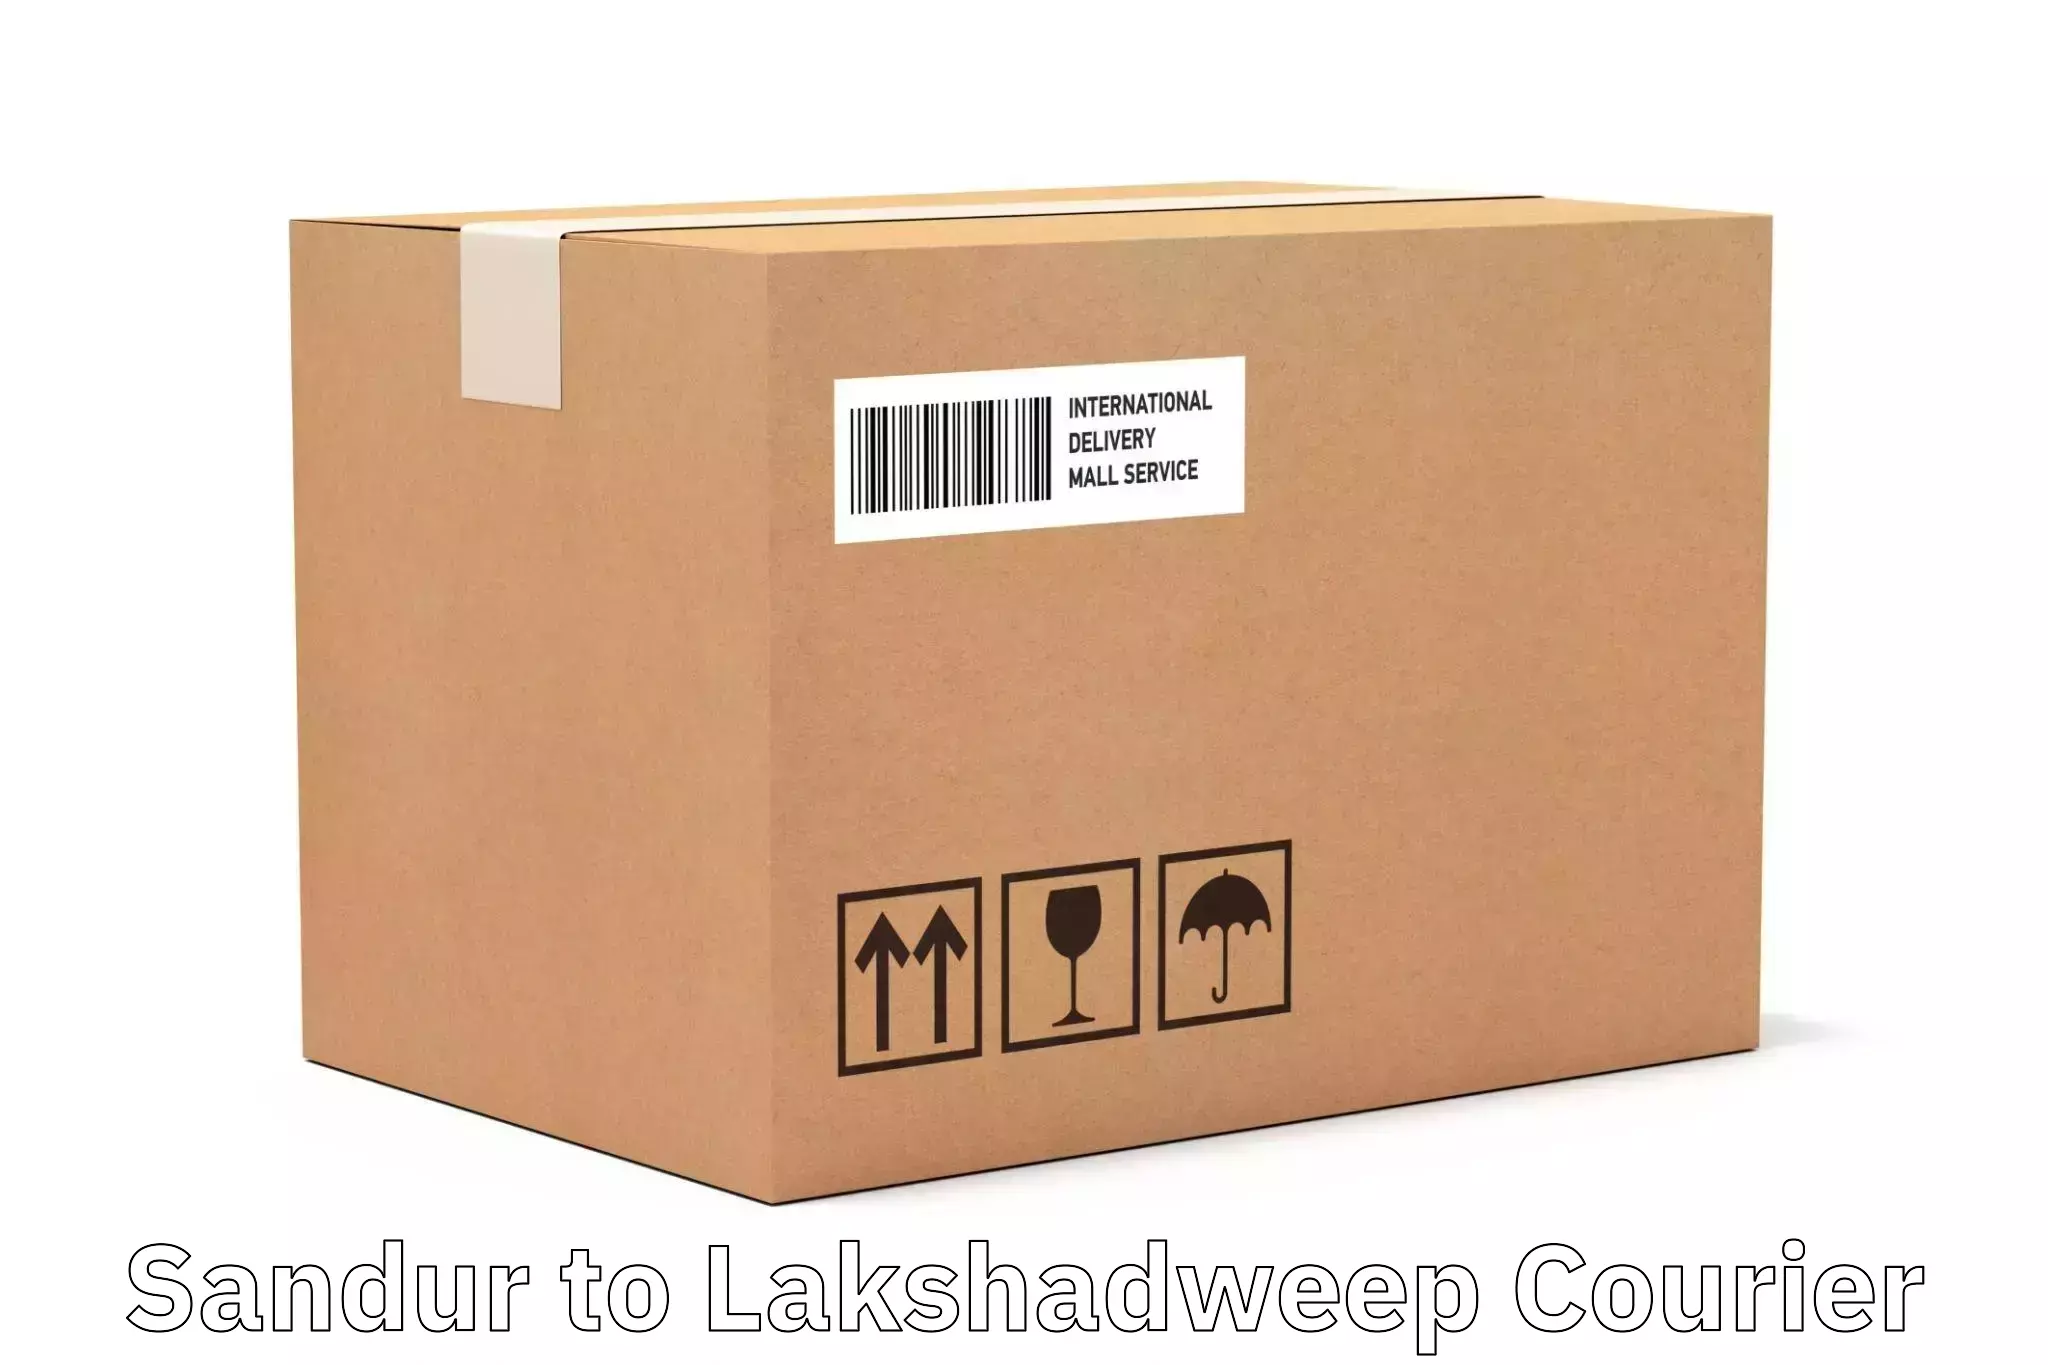 Enhanced shipping experience Sandur to Lakshadweep